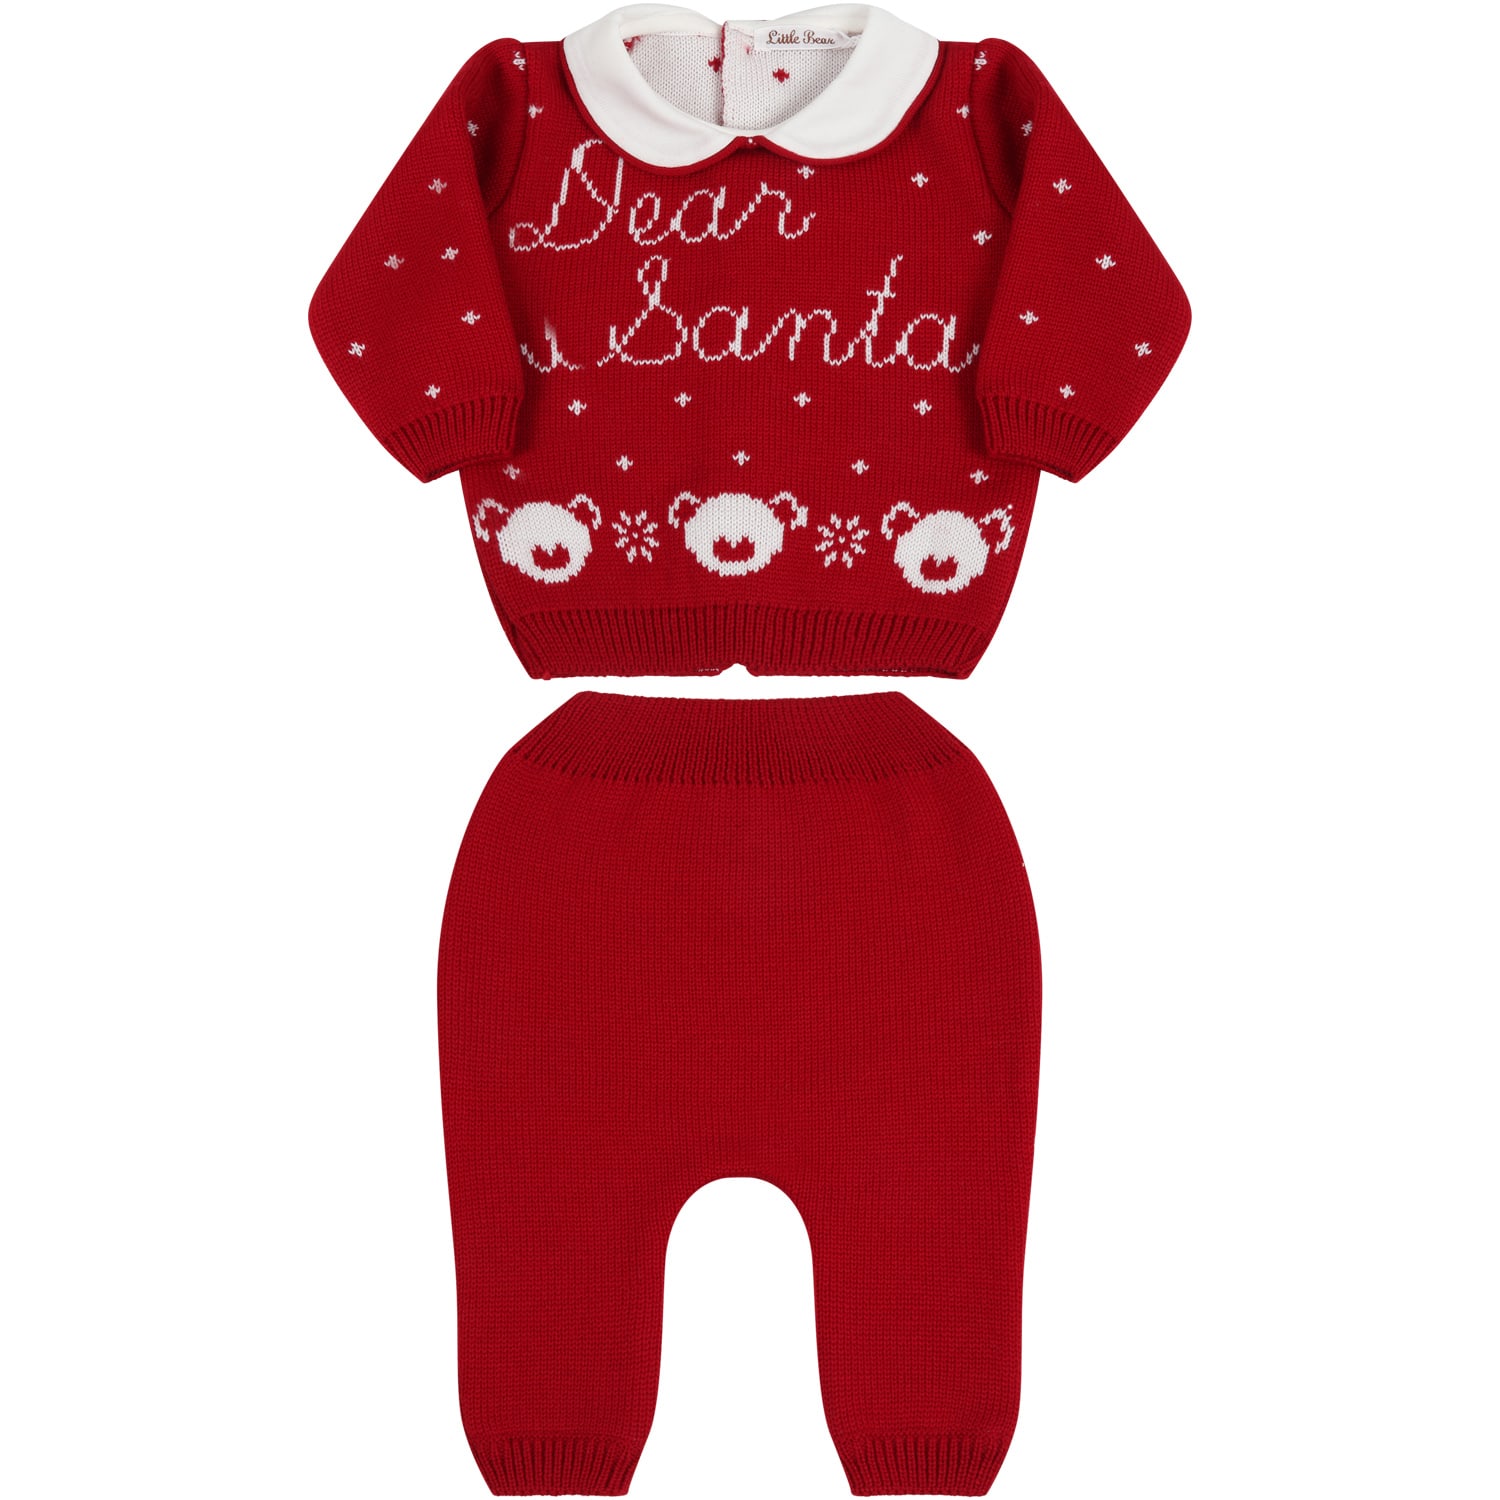 Little Bear Red Knit Suit For Babykids